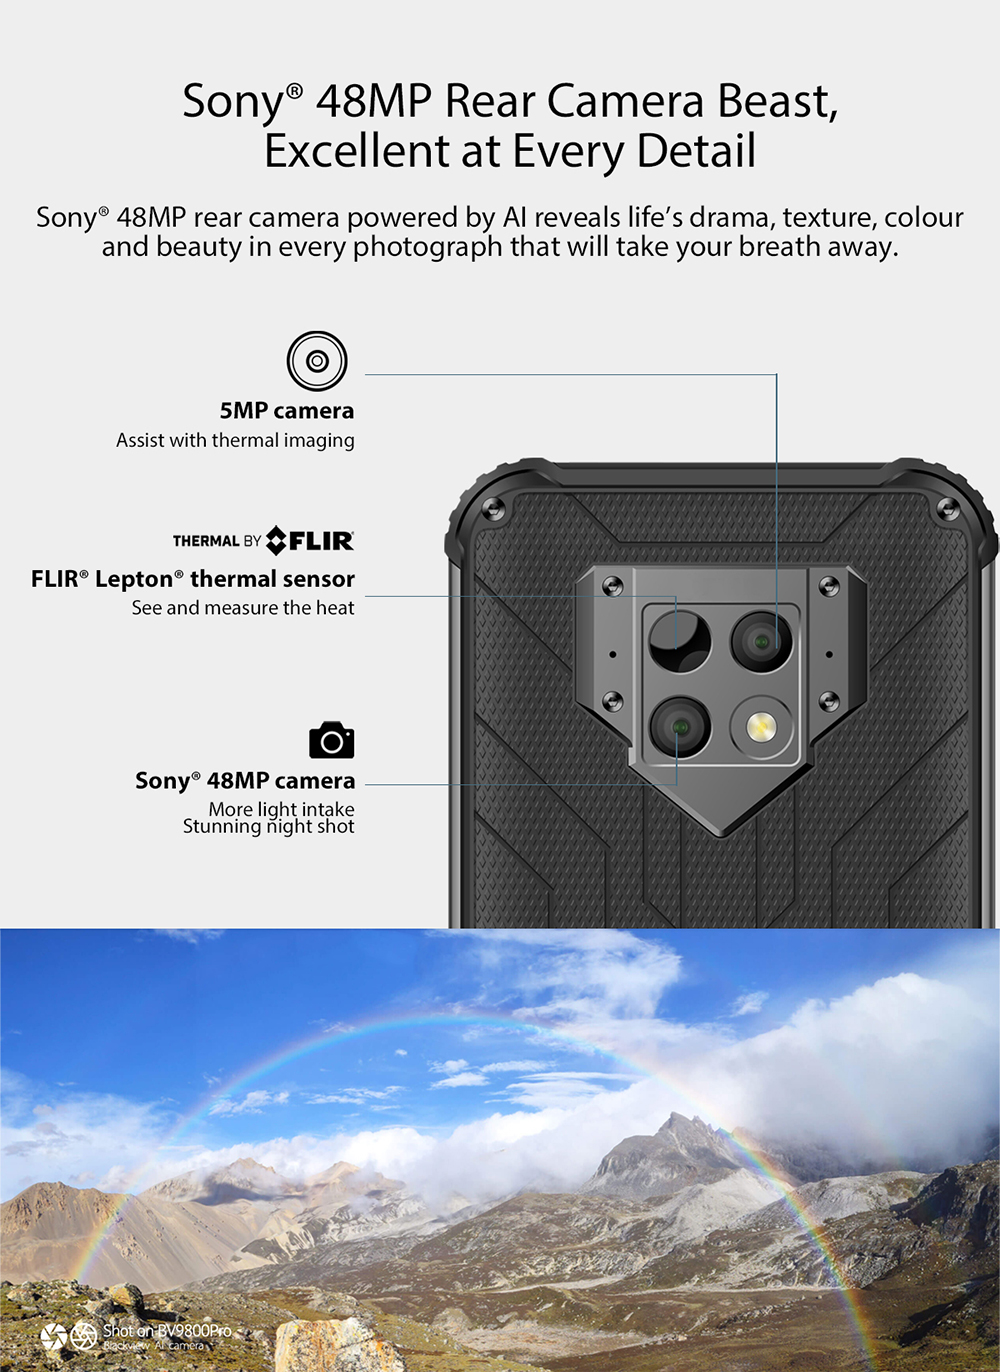 Blackview BV9800 Pro Thermal imaging  Smartphone